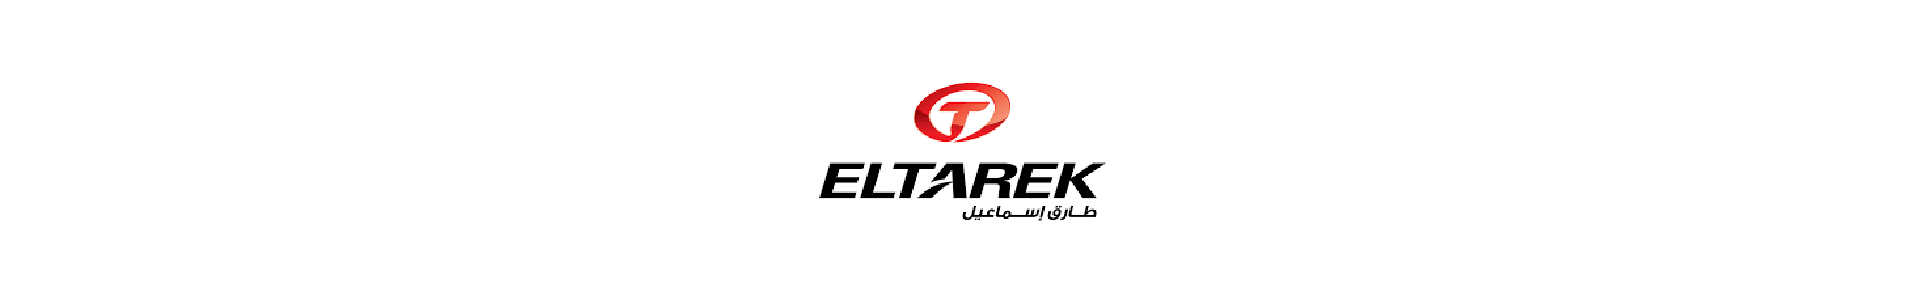 artlink advertising Communication Eltarek